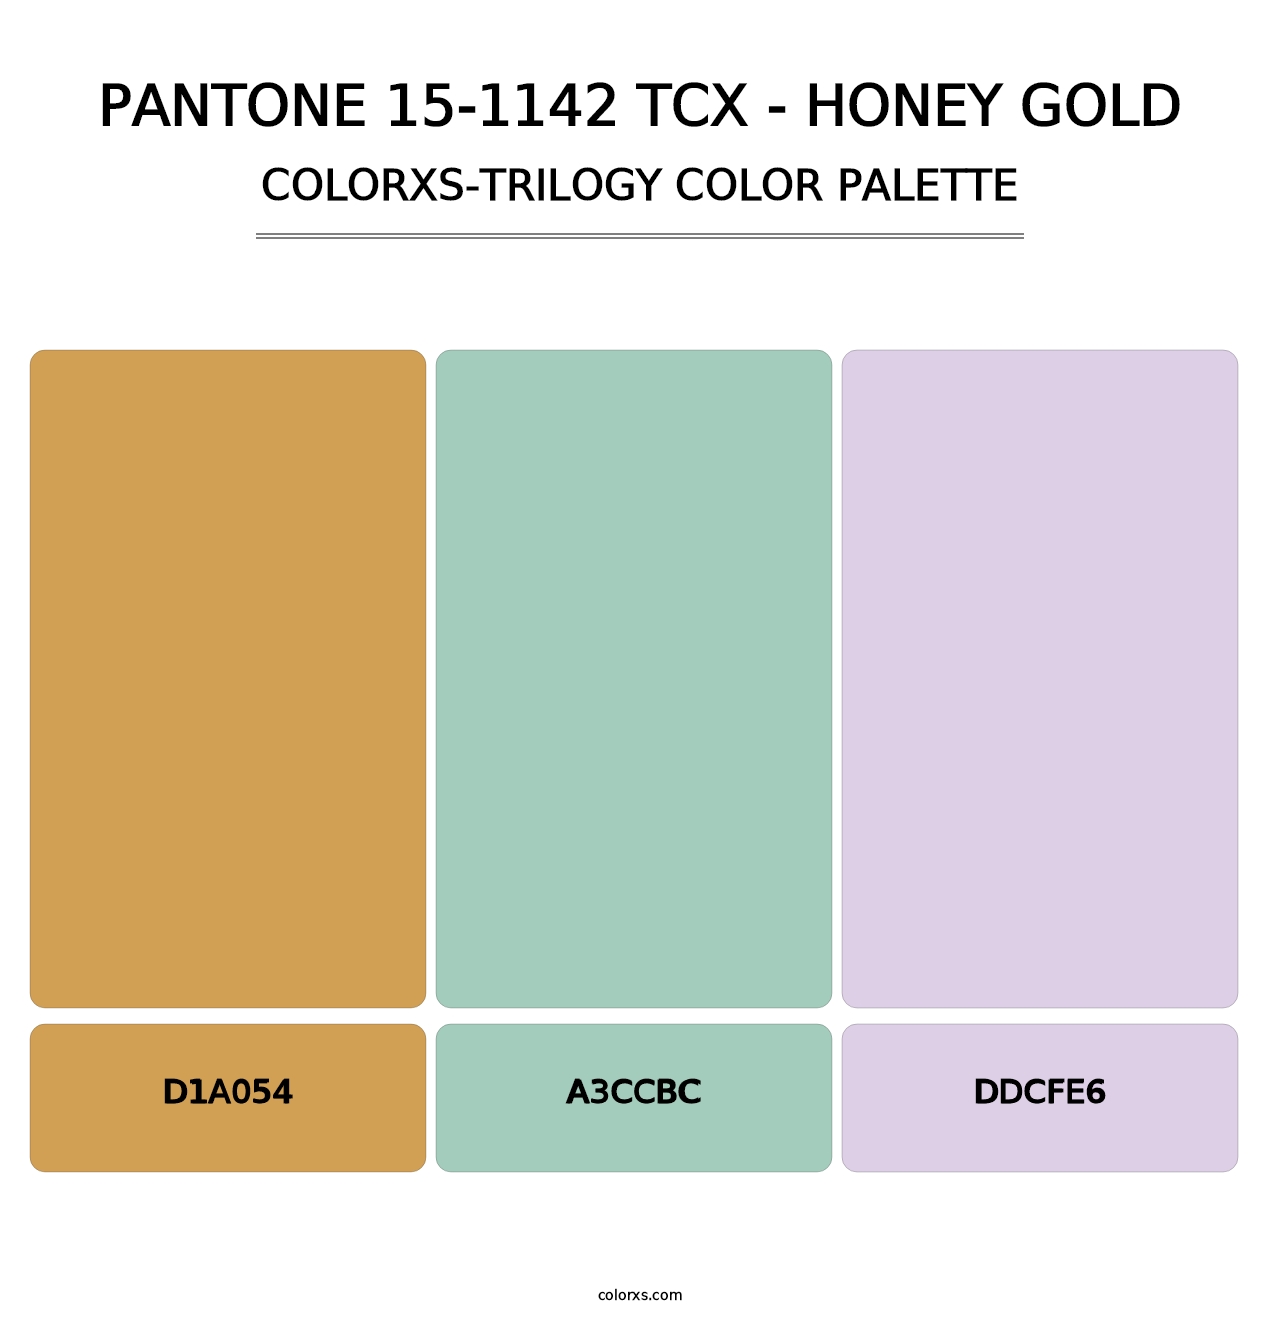 PANTONE 15-1142 TCX - Honey Gold - Colorxs Trilogy Palette